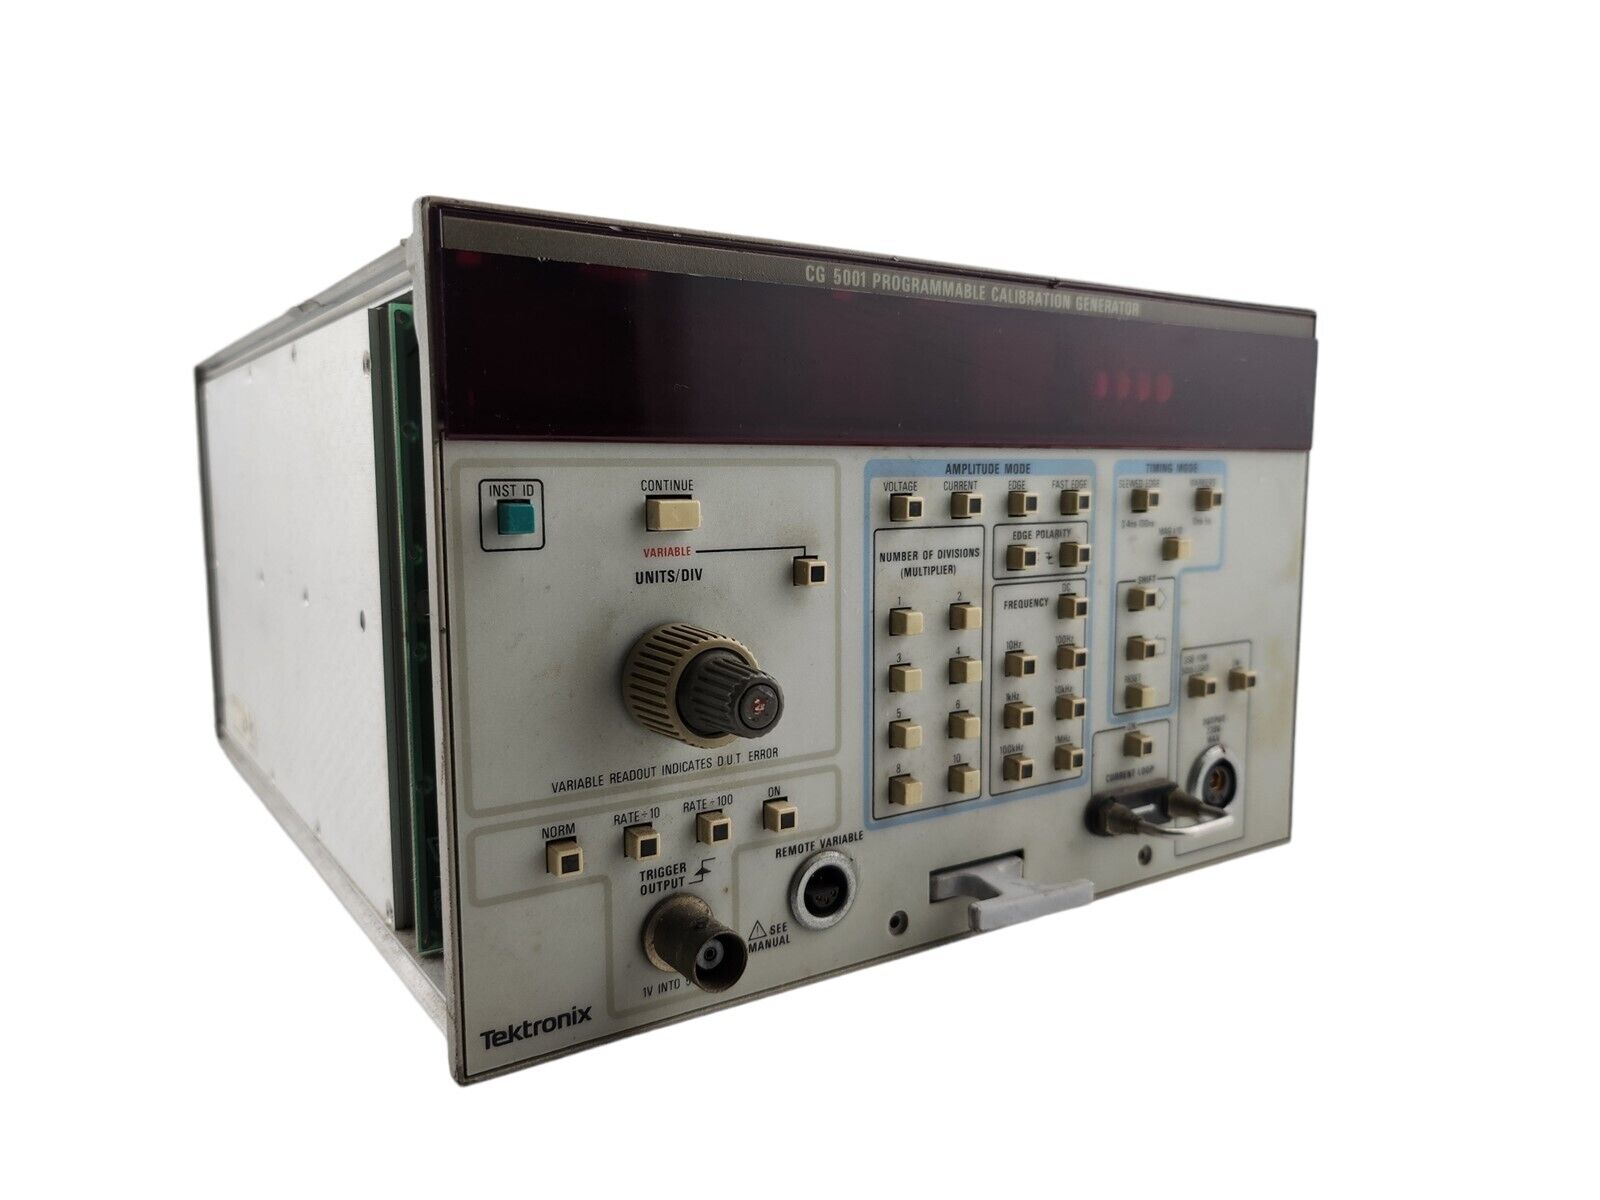 Tektronix CG 5001 Programmable Calibration Generator Plug-In Module Unit CG5001